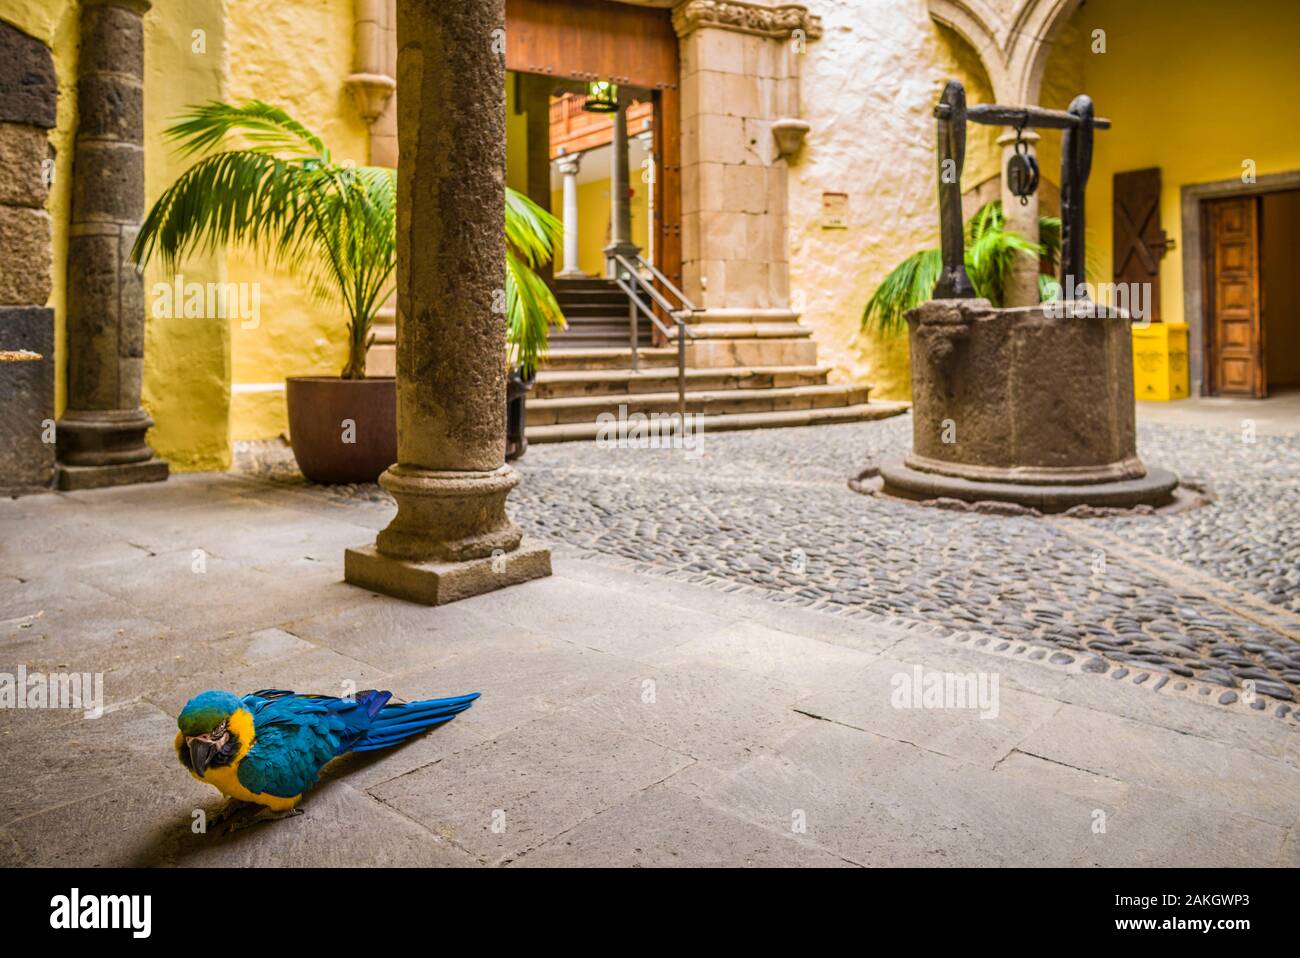 Spain, Canary Islands, Gran Canaria Island, Las Palmas de Gran Canaria, Casa Museo de Colon, courtyard with parrot Stock Photo